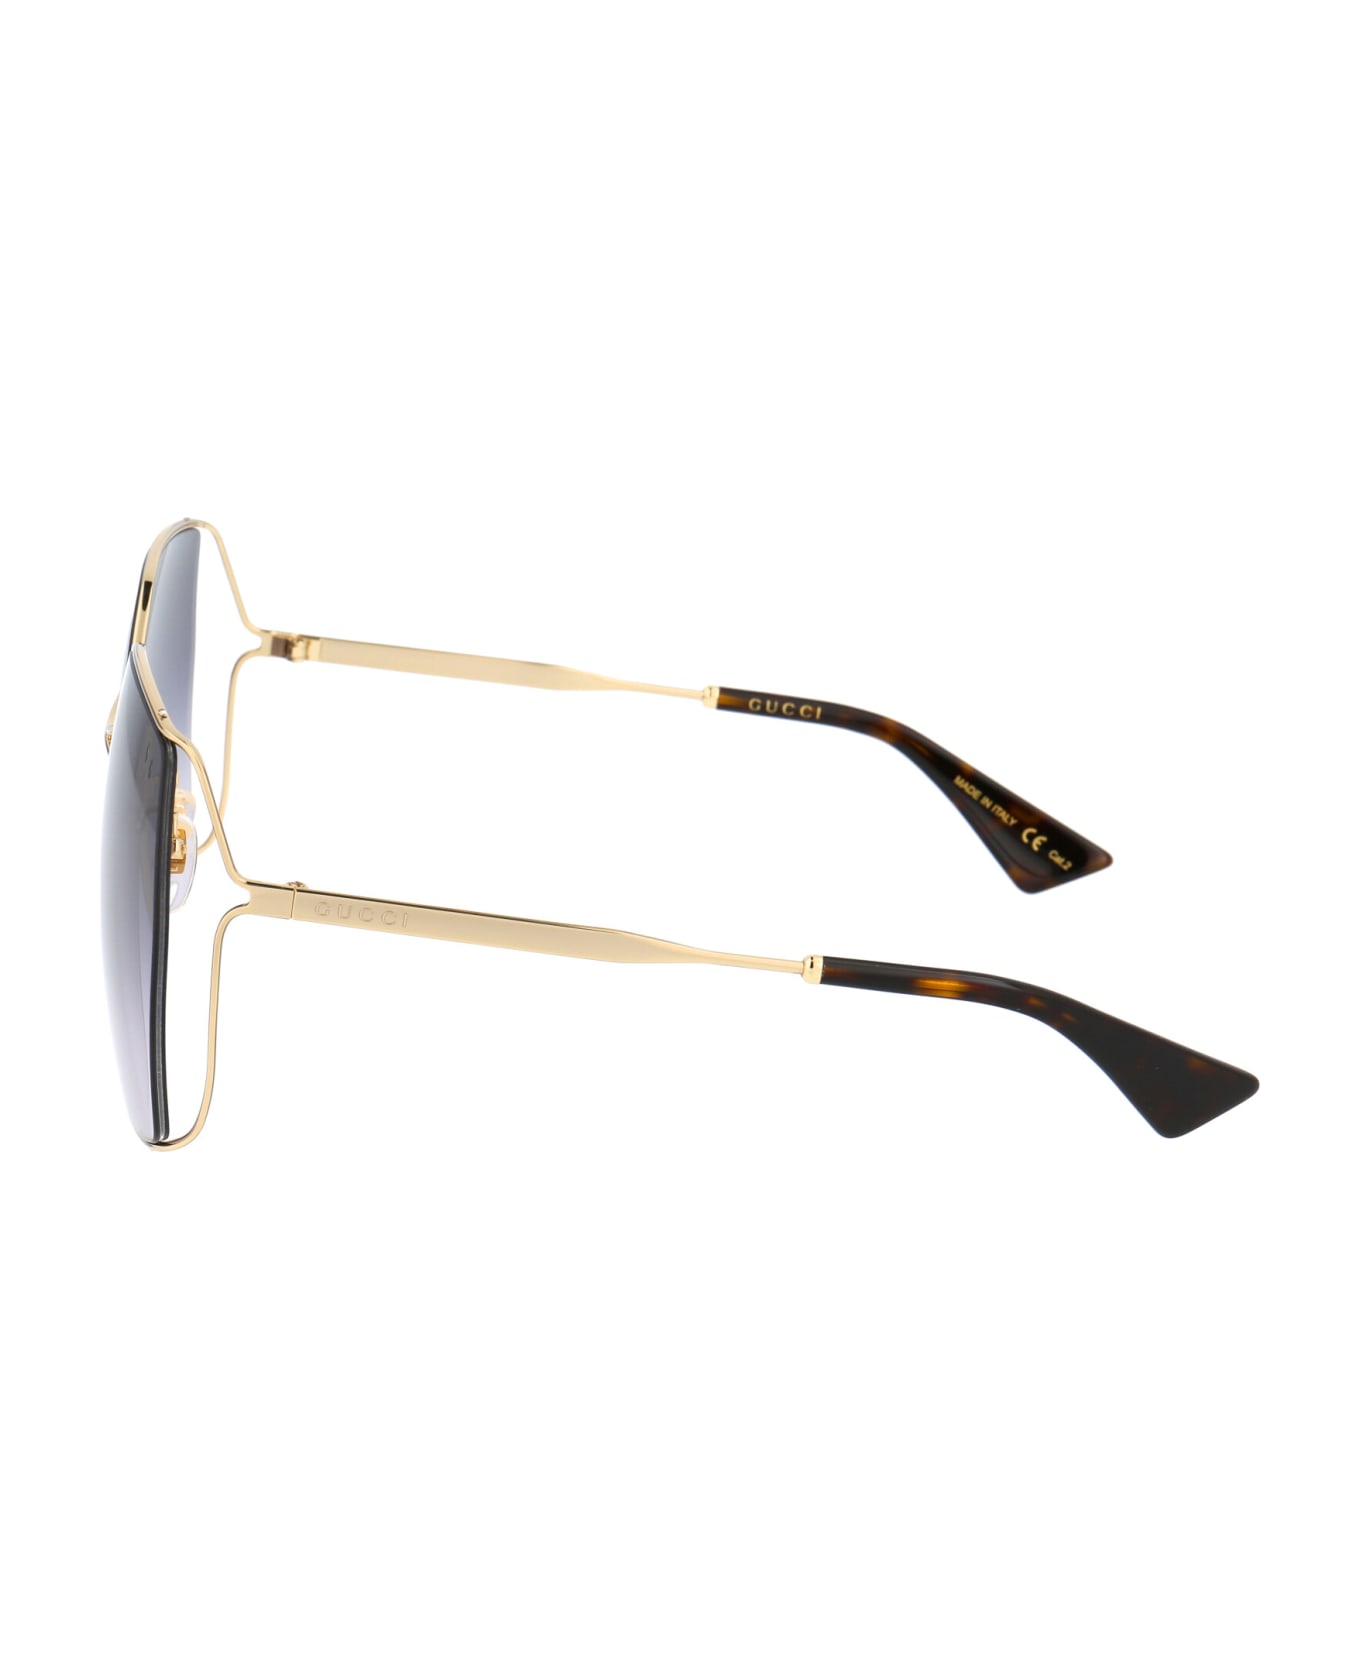 Gucci Eyewear Gg0817s Sunglasses - 001 GOLD GOLD GREY